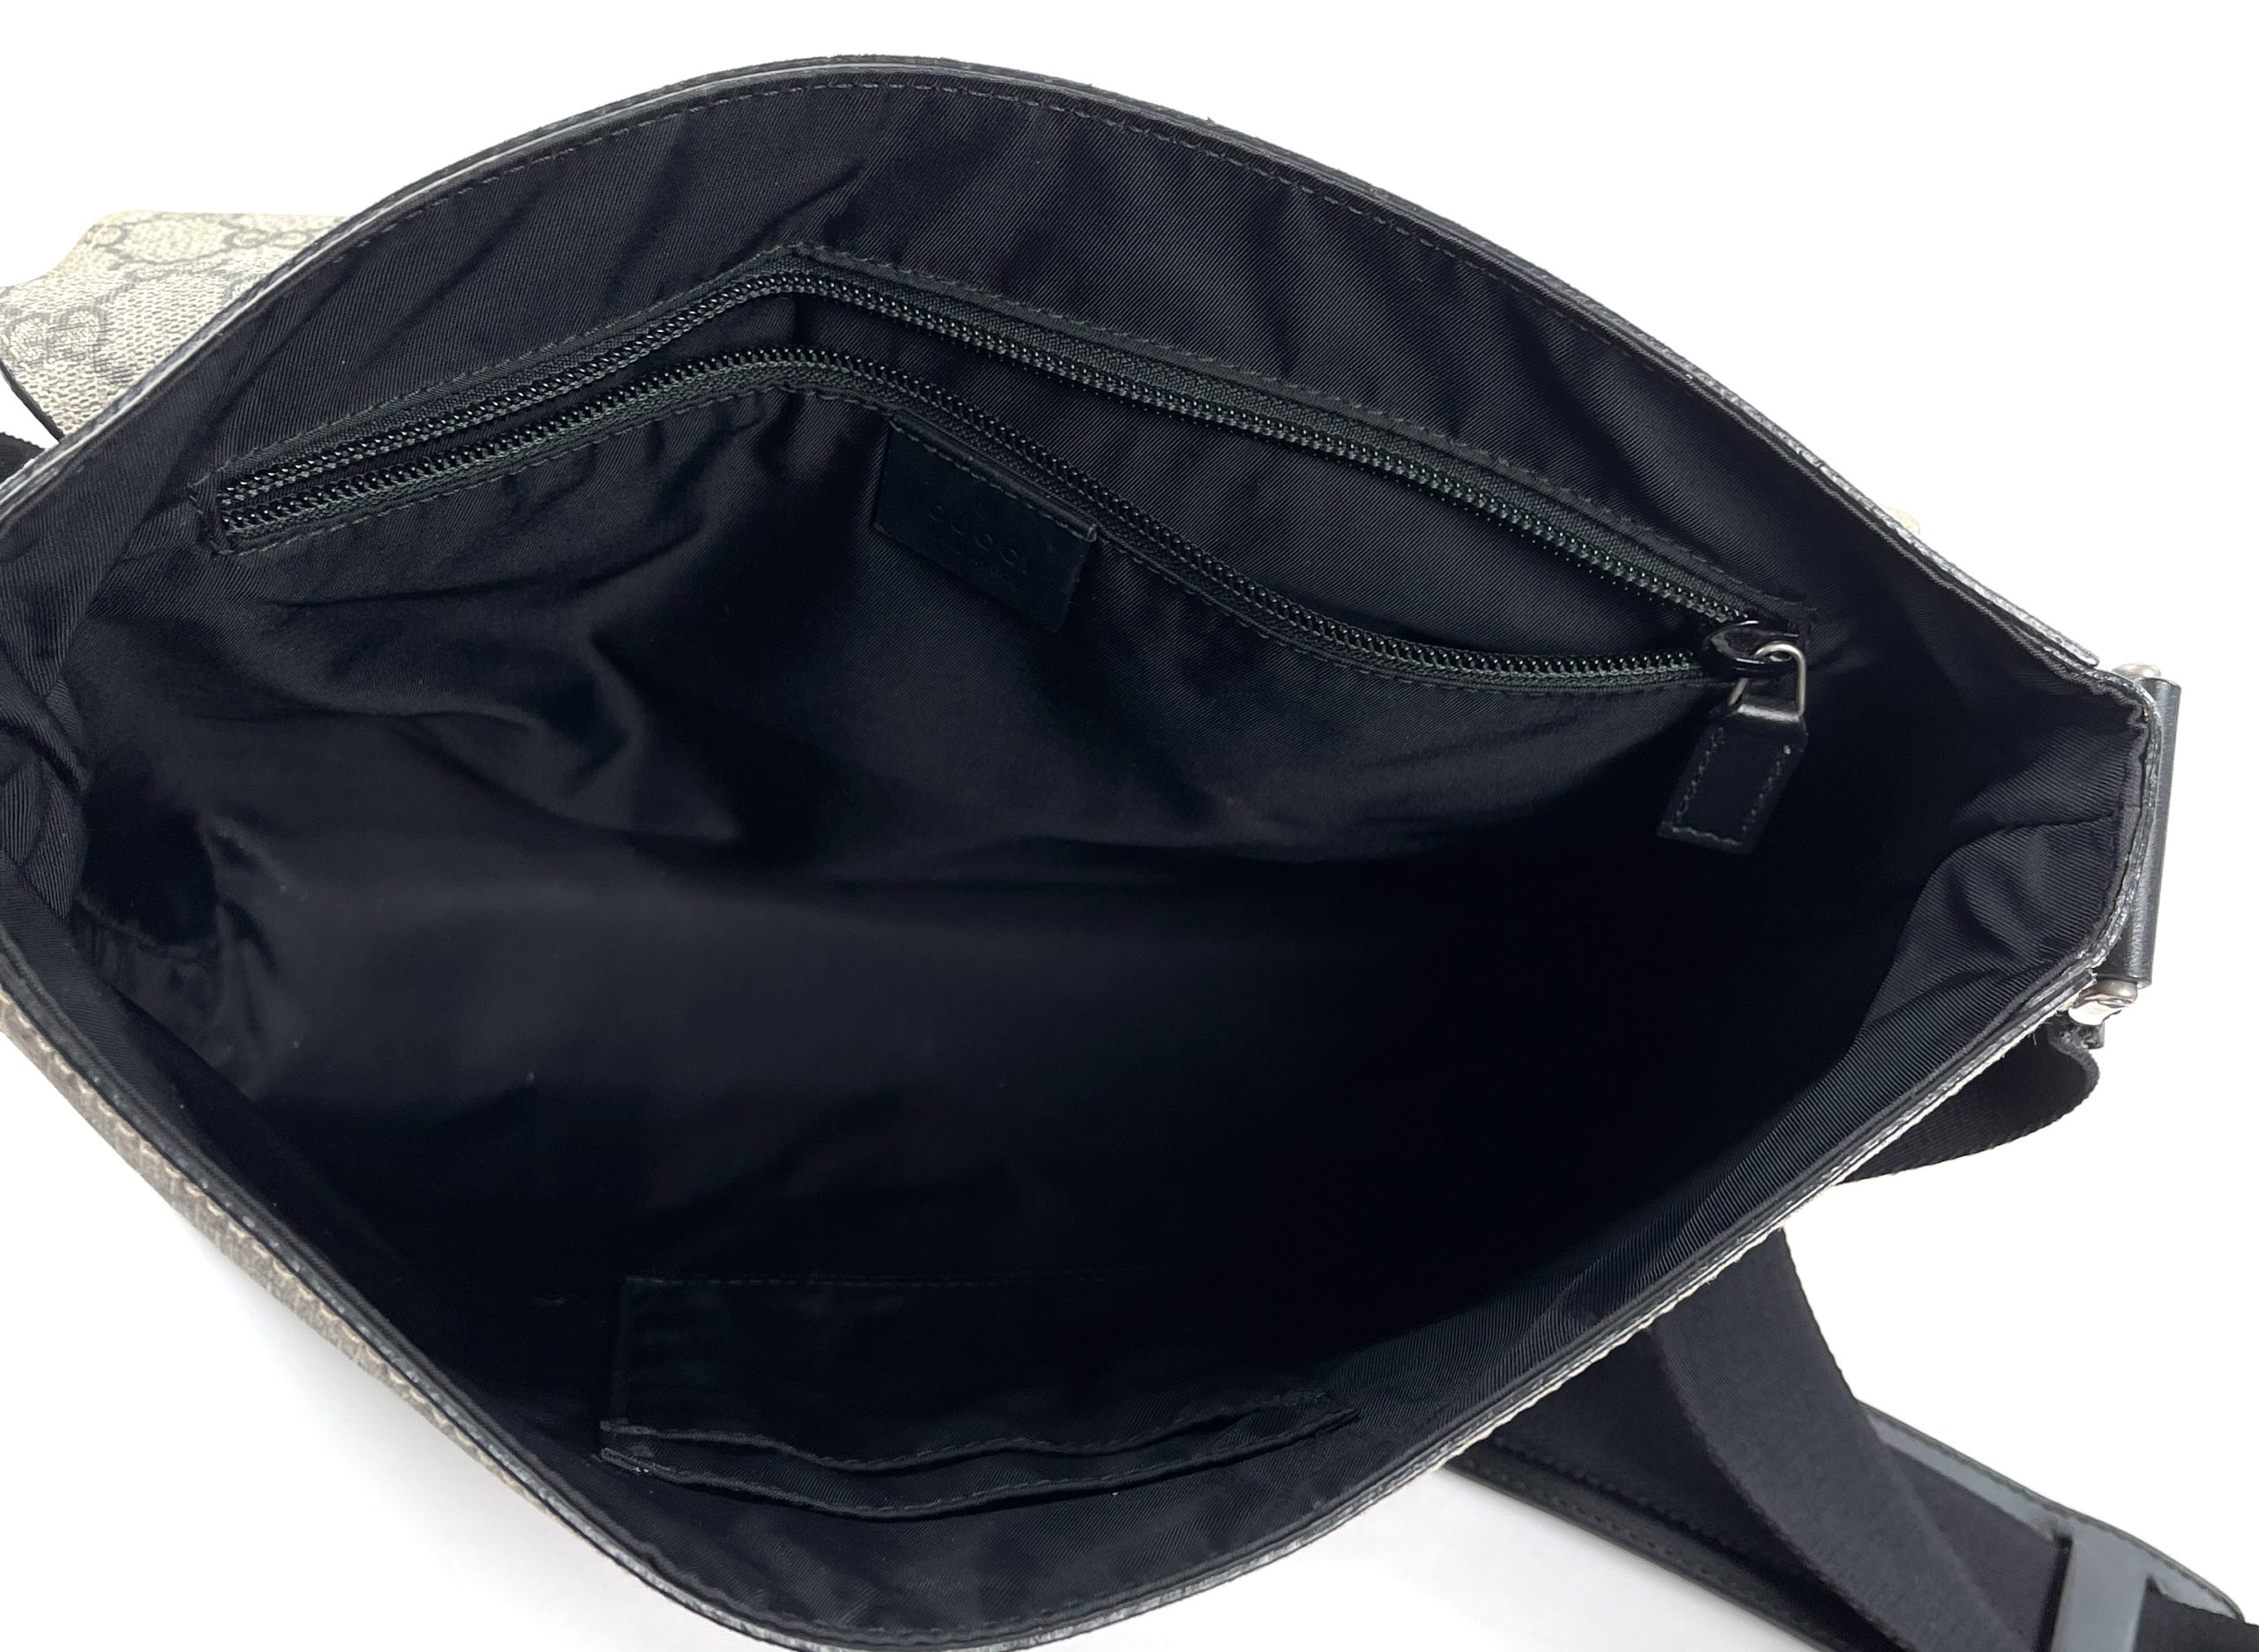 Gucci Black Signature Leather Flap Messenger Bag Gucci